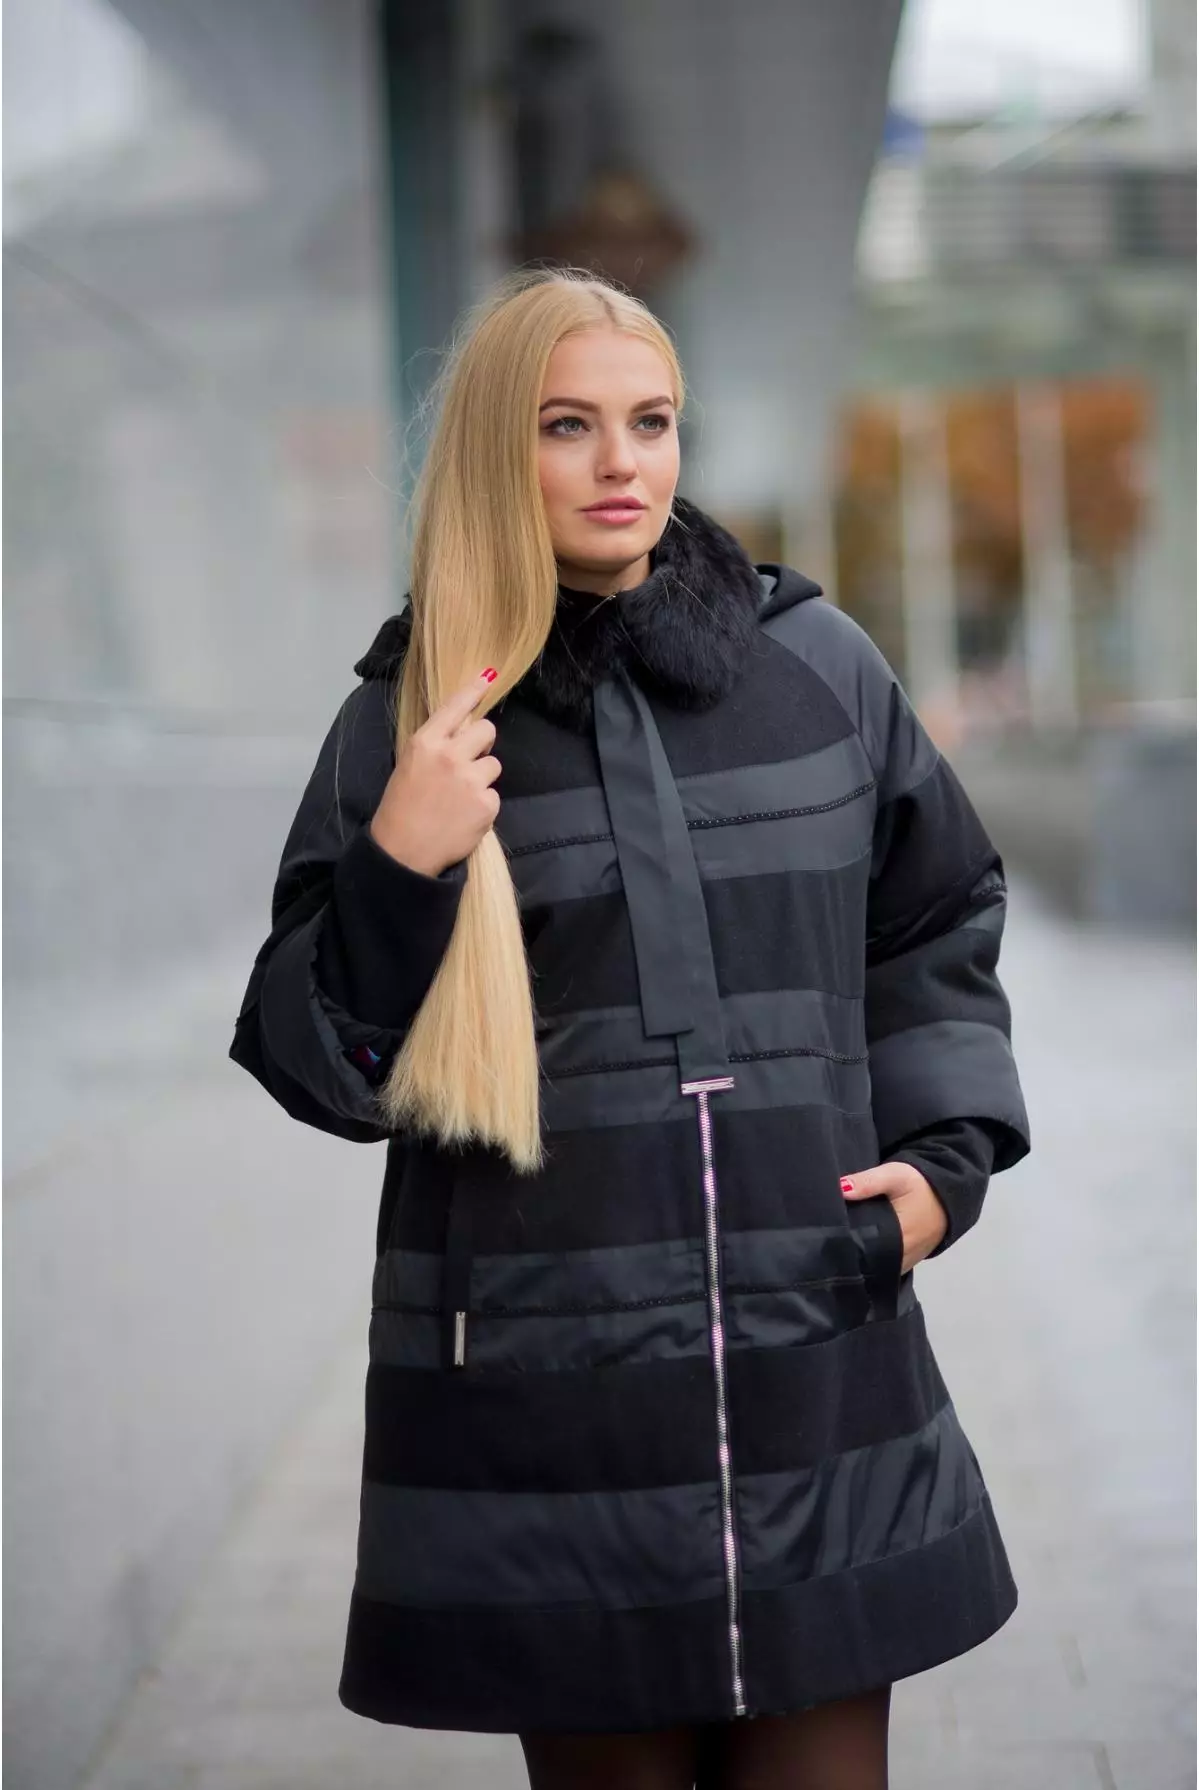 Fulde Kvinder Frakker (282 billeder): Fashion Trends 2021, Stoy Stoys, Singry Training, Fish, Finnish, Poncho 594_160